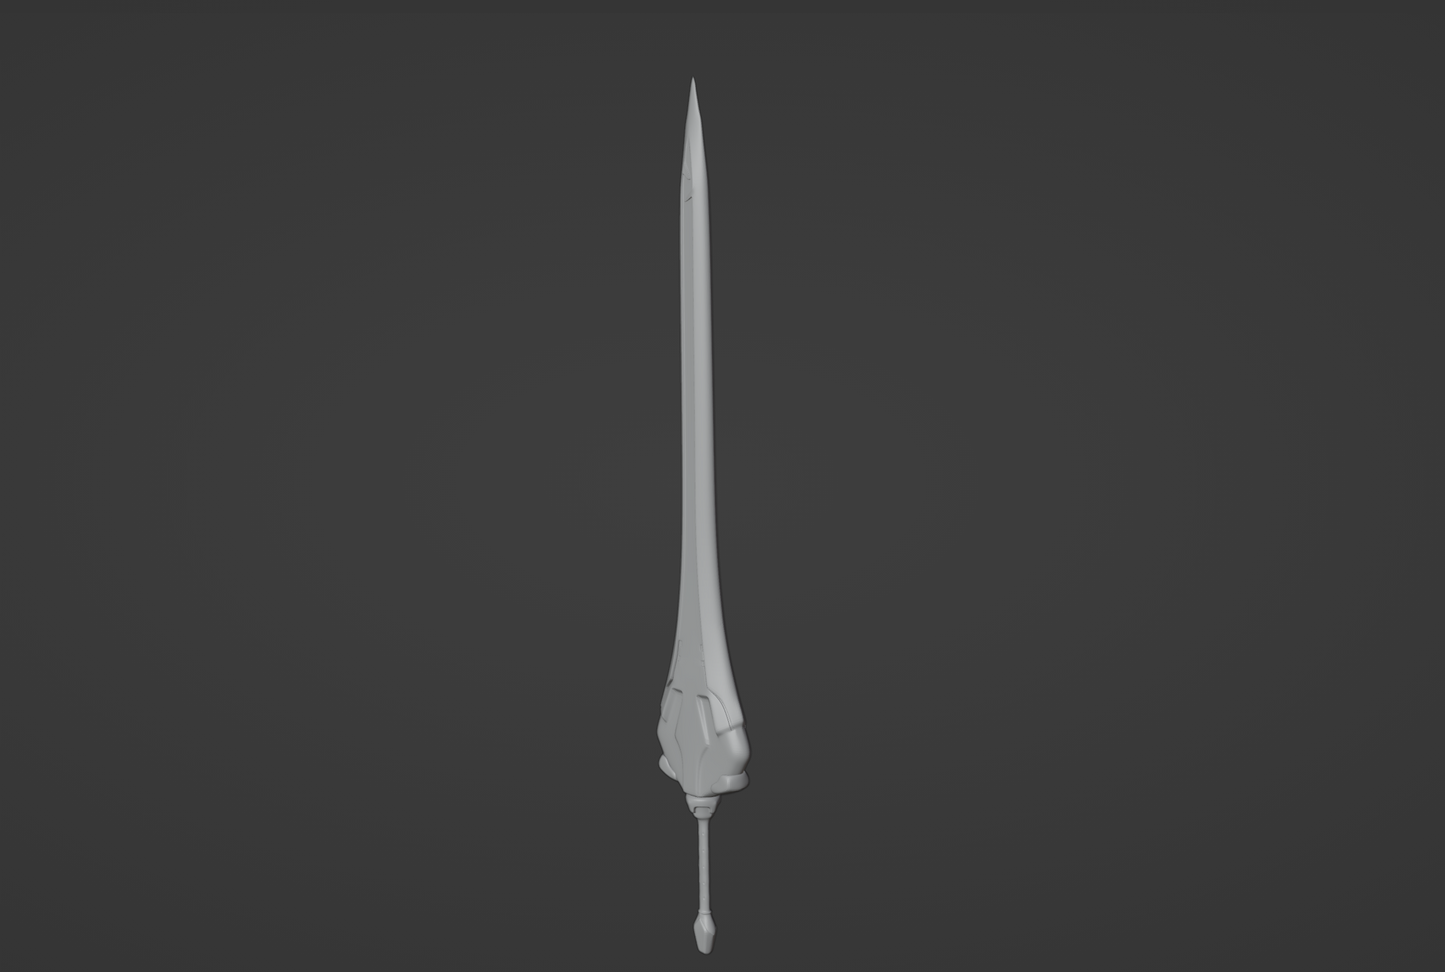 Gawain's Galatine - Digital 3D Model Files and Physical 3D Printed Kit Options - Gawain Sword